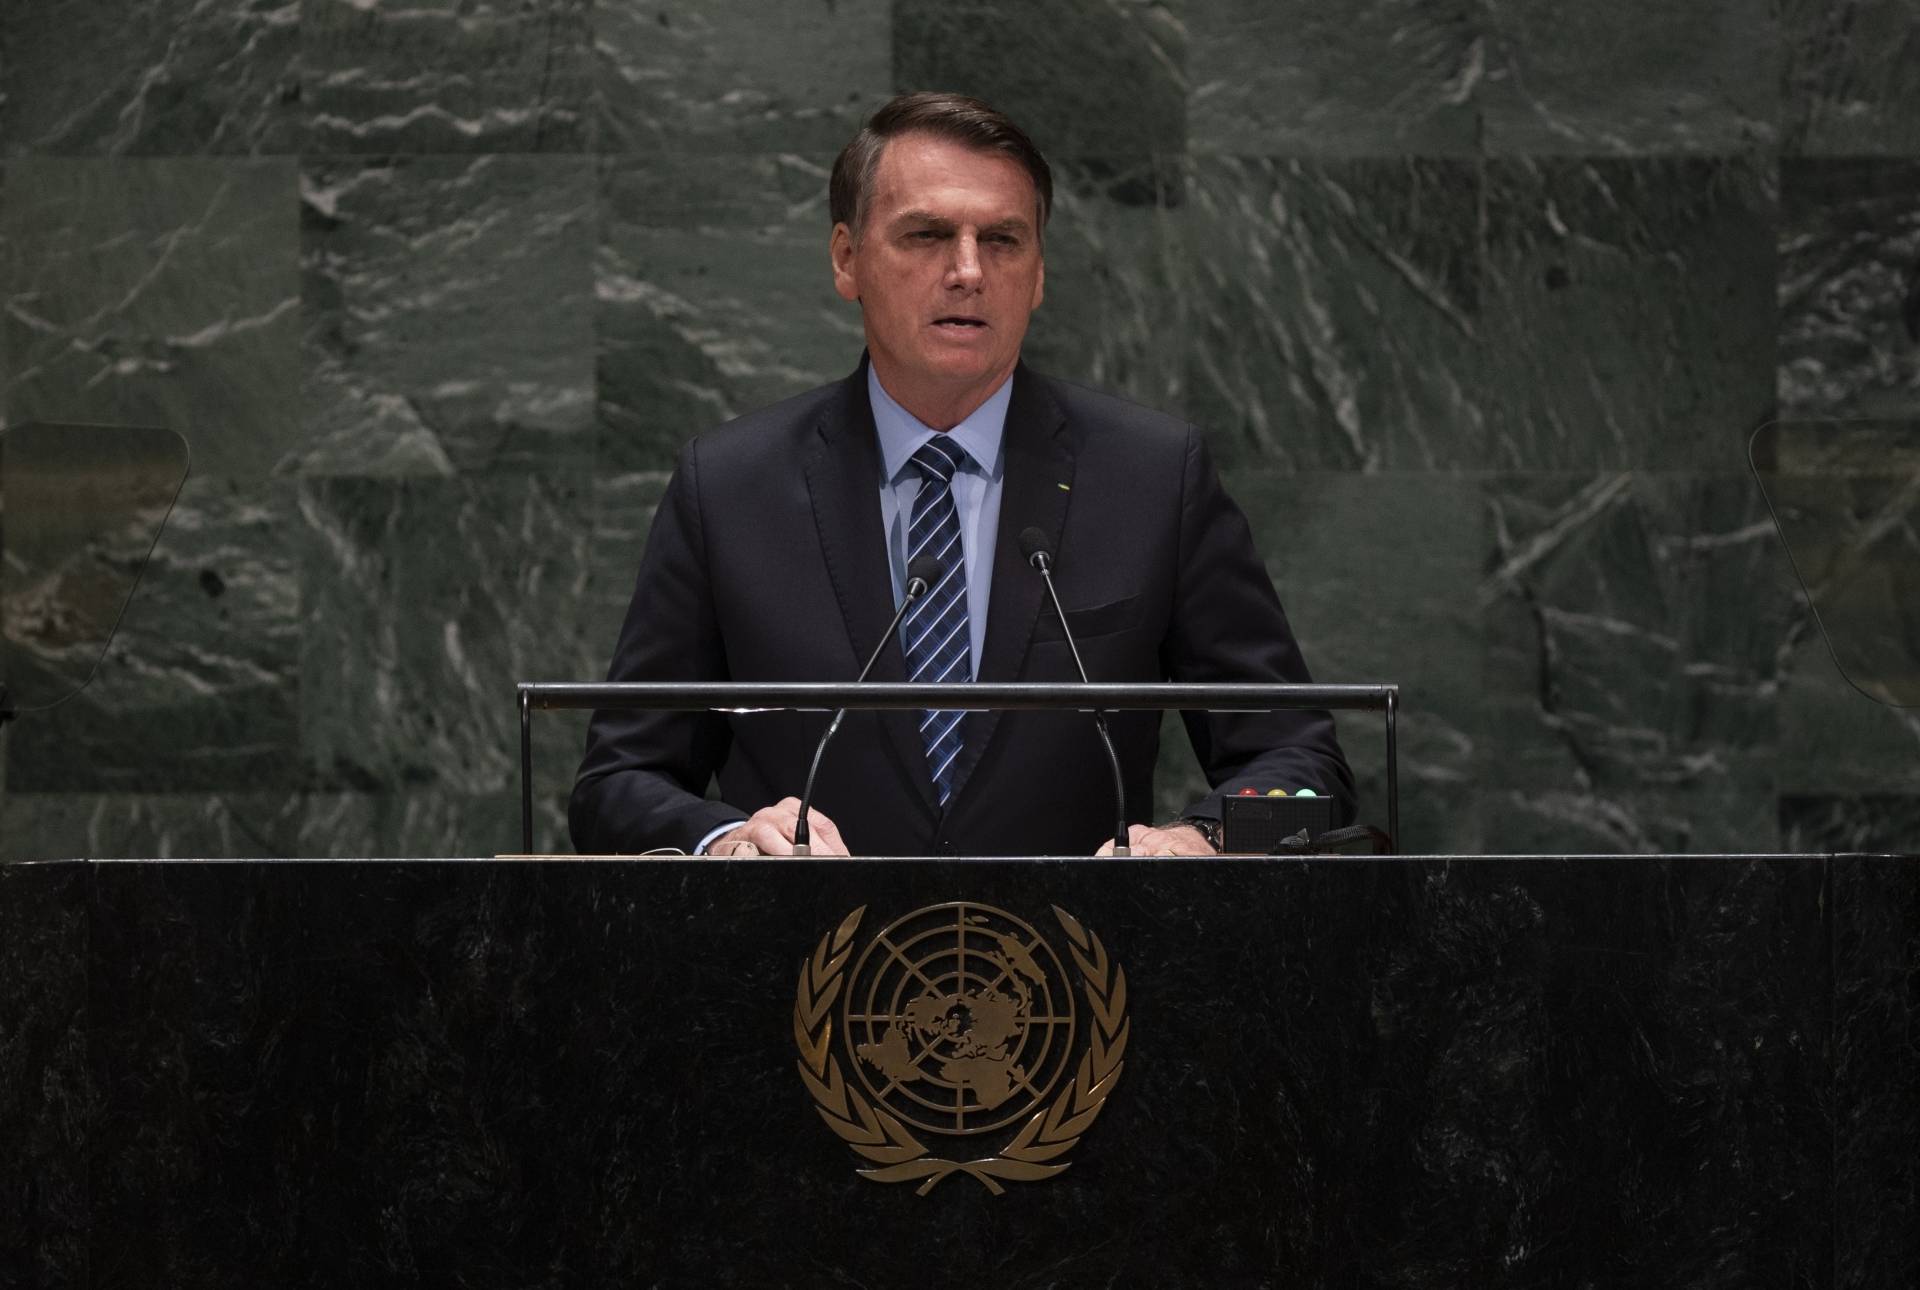 Saiba quais assuntos Bolsonaro abordará durante discurso na ONU